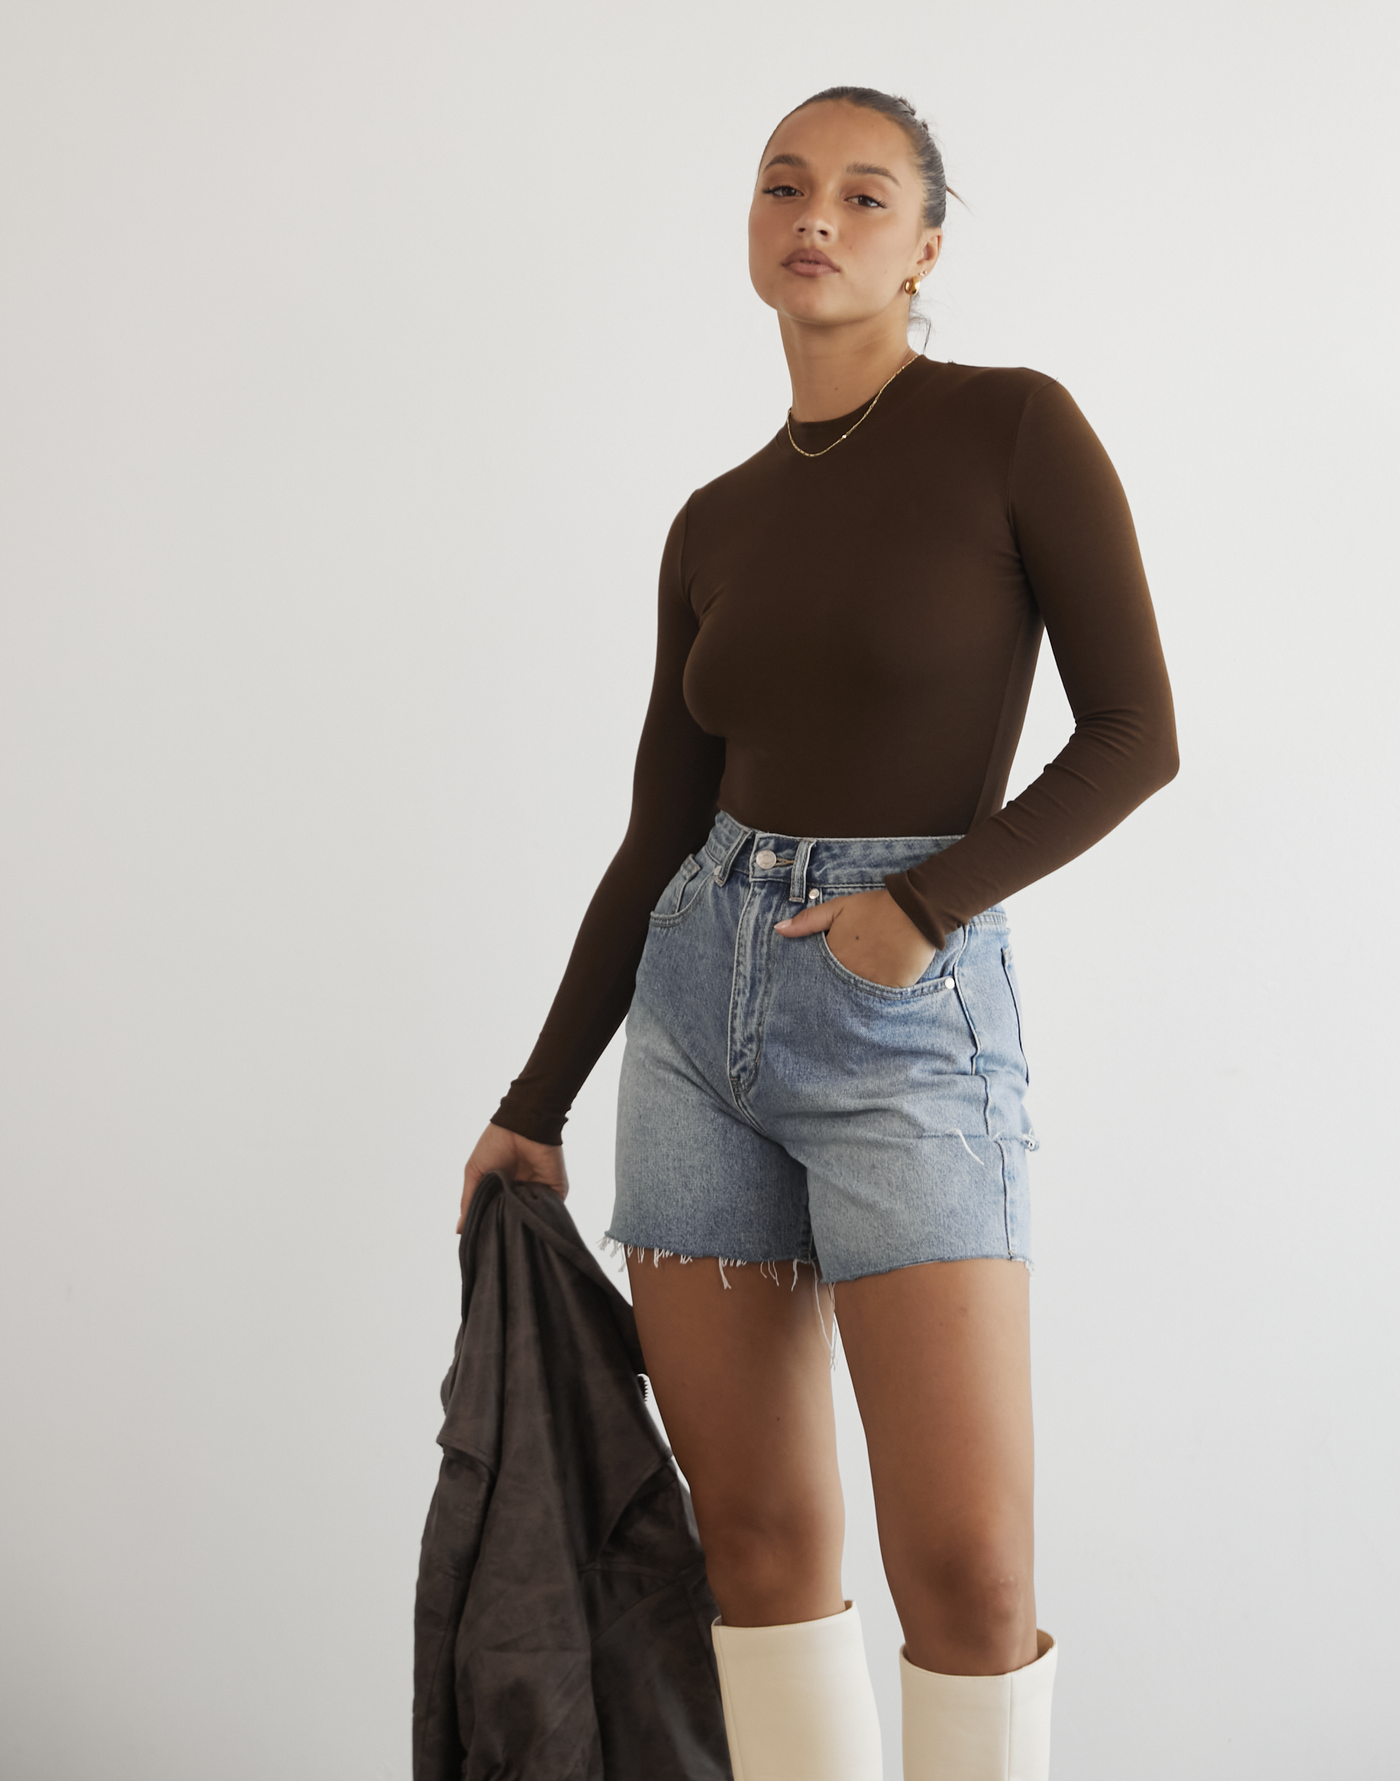 Wisteria Long Sleeve Bodysuit (Brown) - High Neckline Bodysuit - Women's Top - Charcoal Clothing